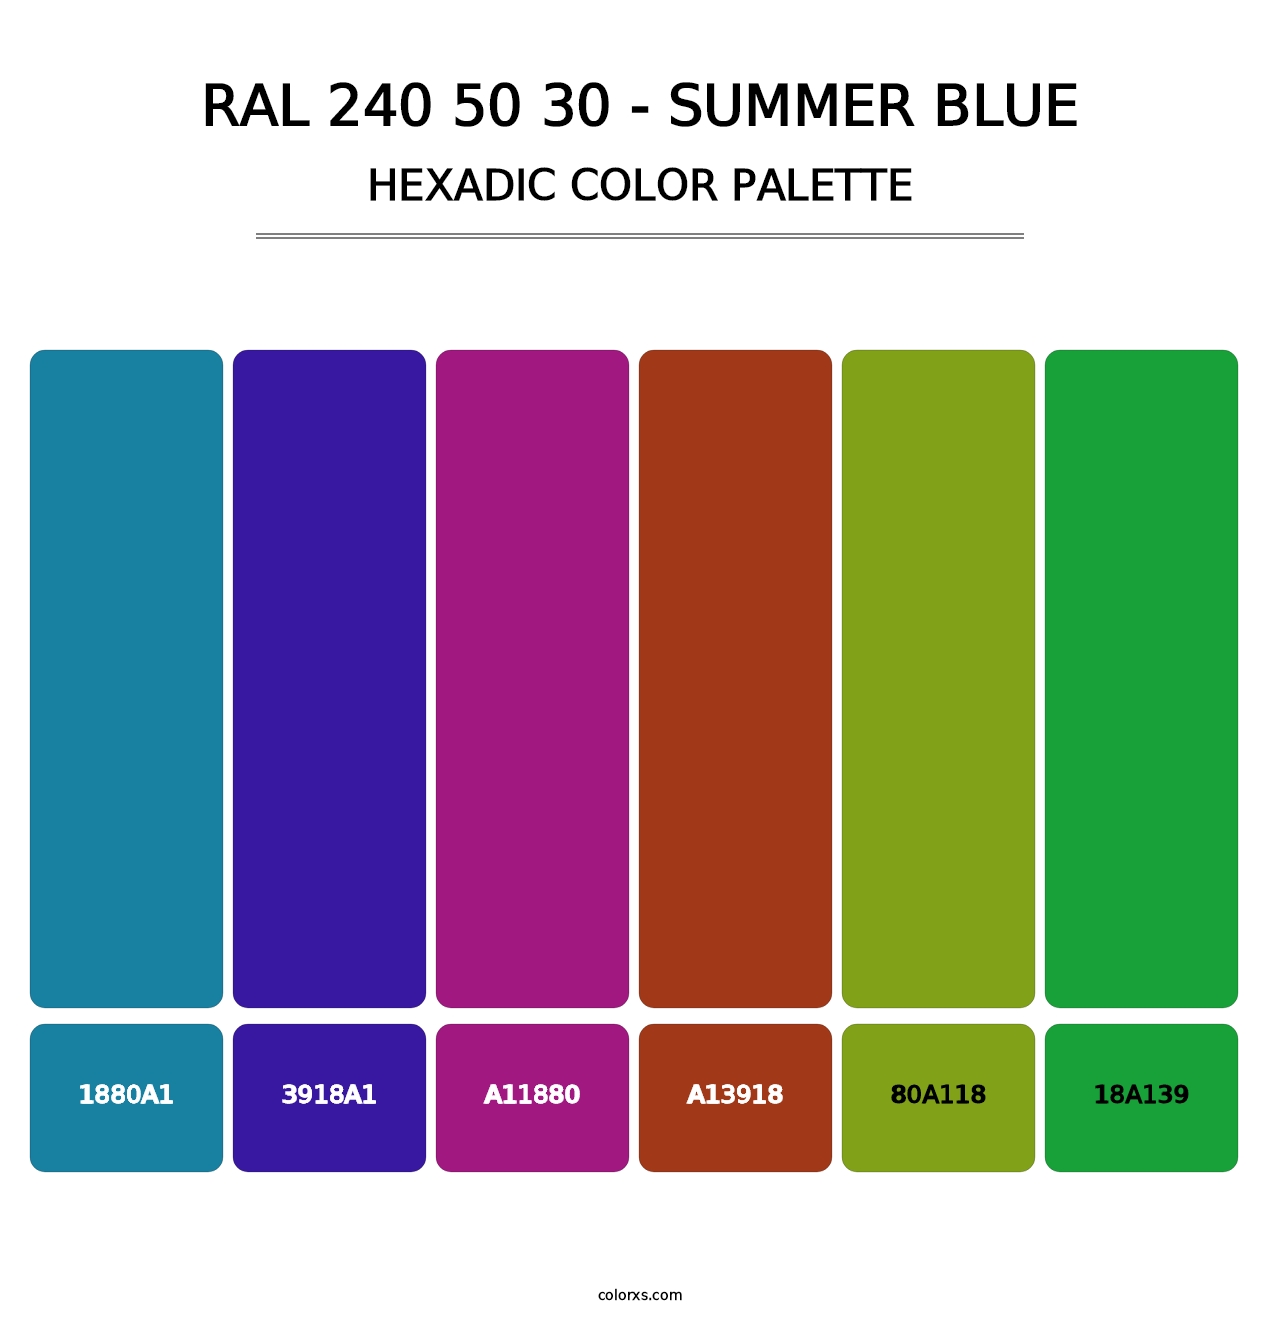 RAL 240 50 30 - Summer Blue - Hexadic Color Palette